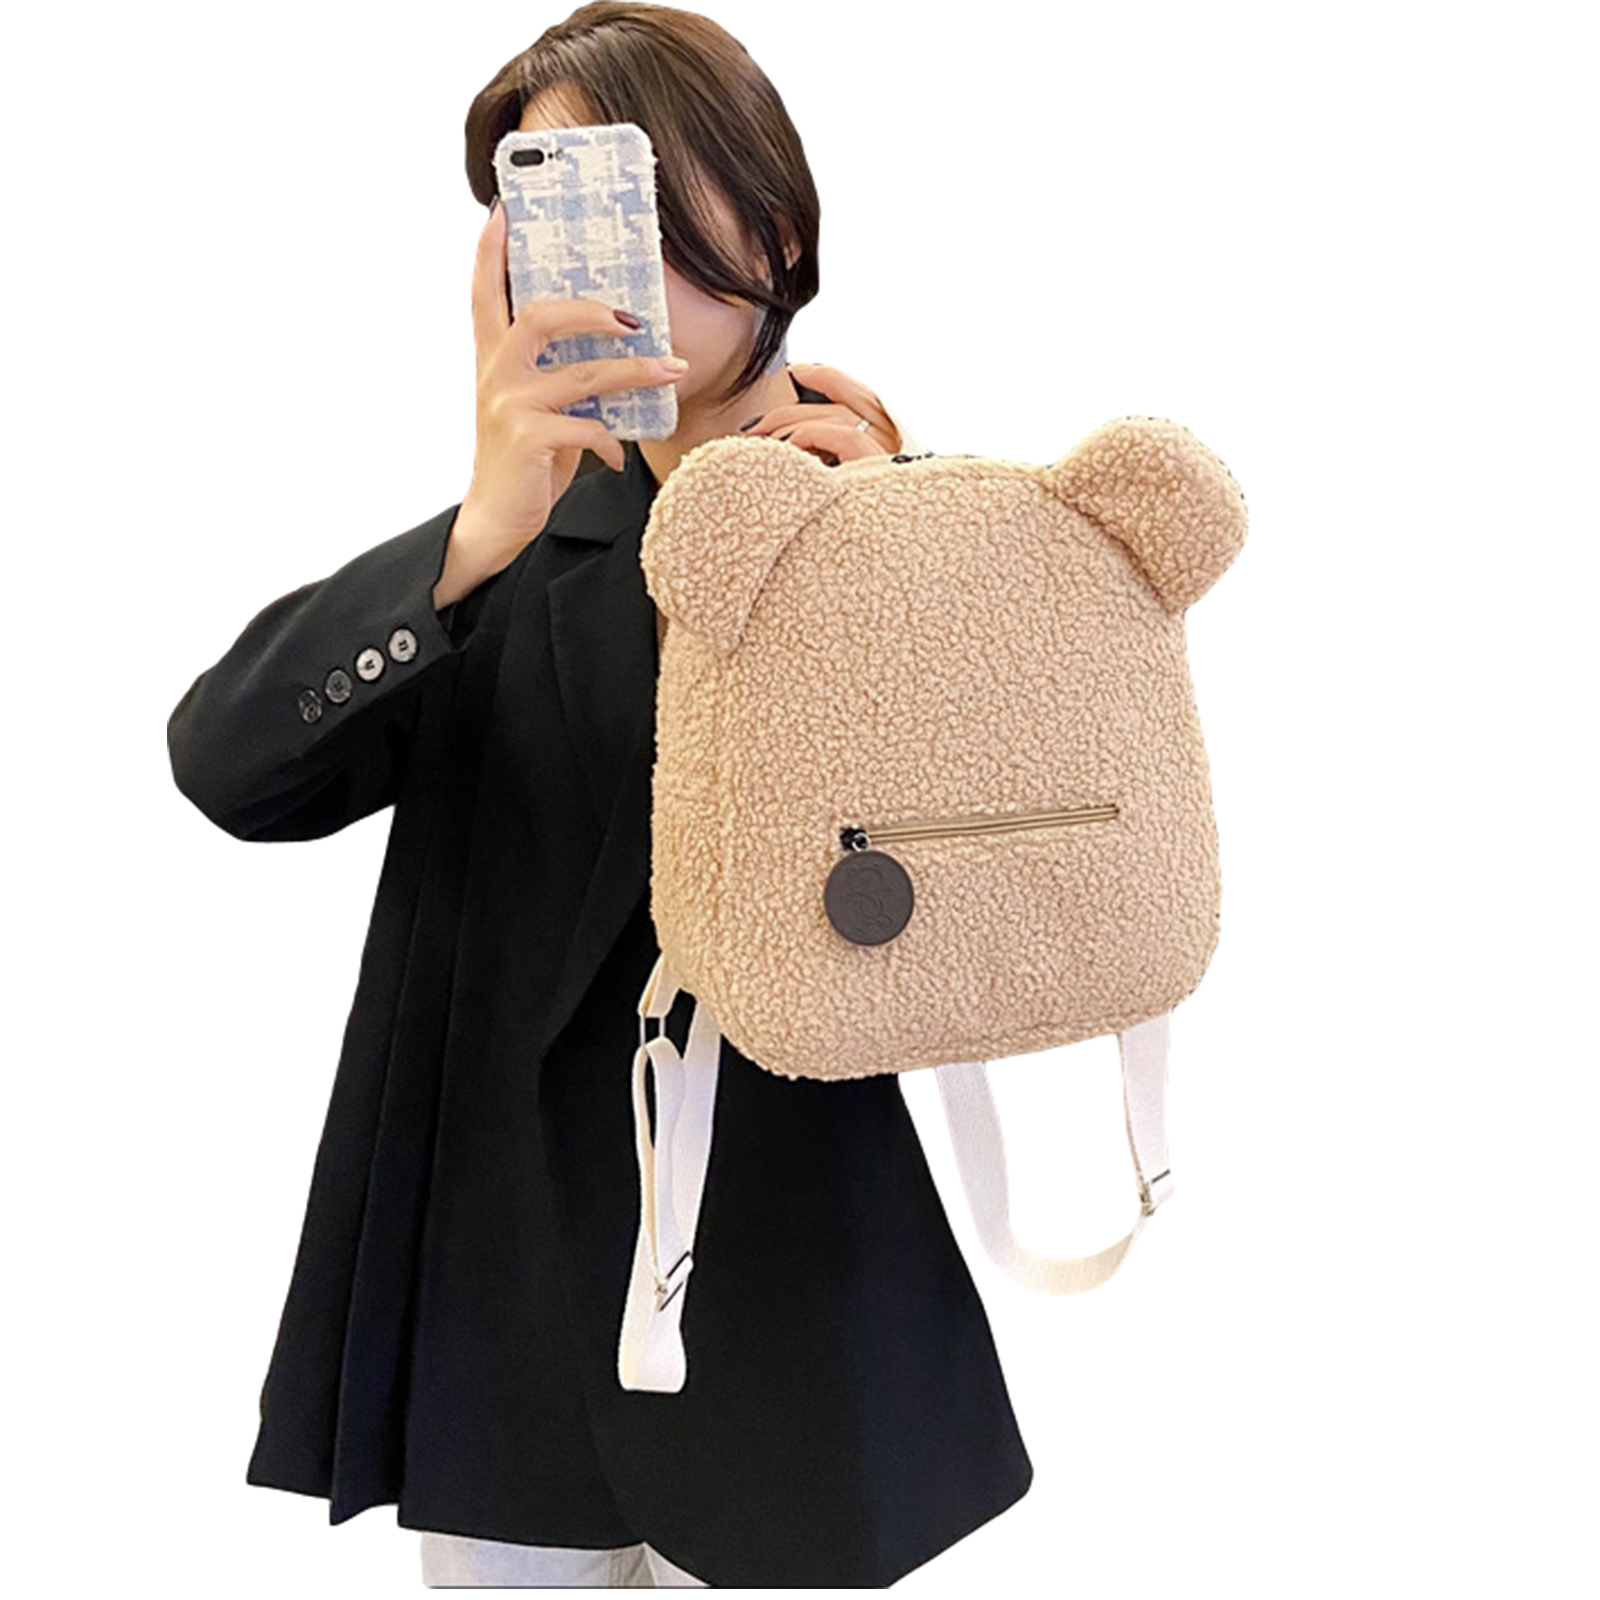 Puloru Women Girls Cute Bear Ear Fleece Solid Color Small Backpack Daypack - image 4 of 5